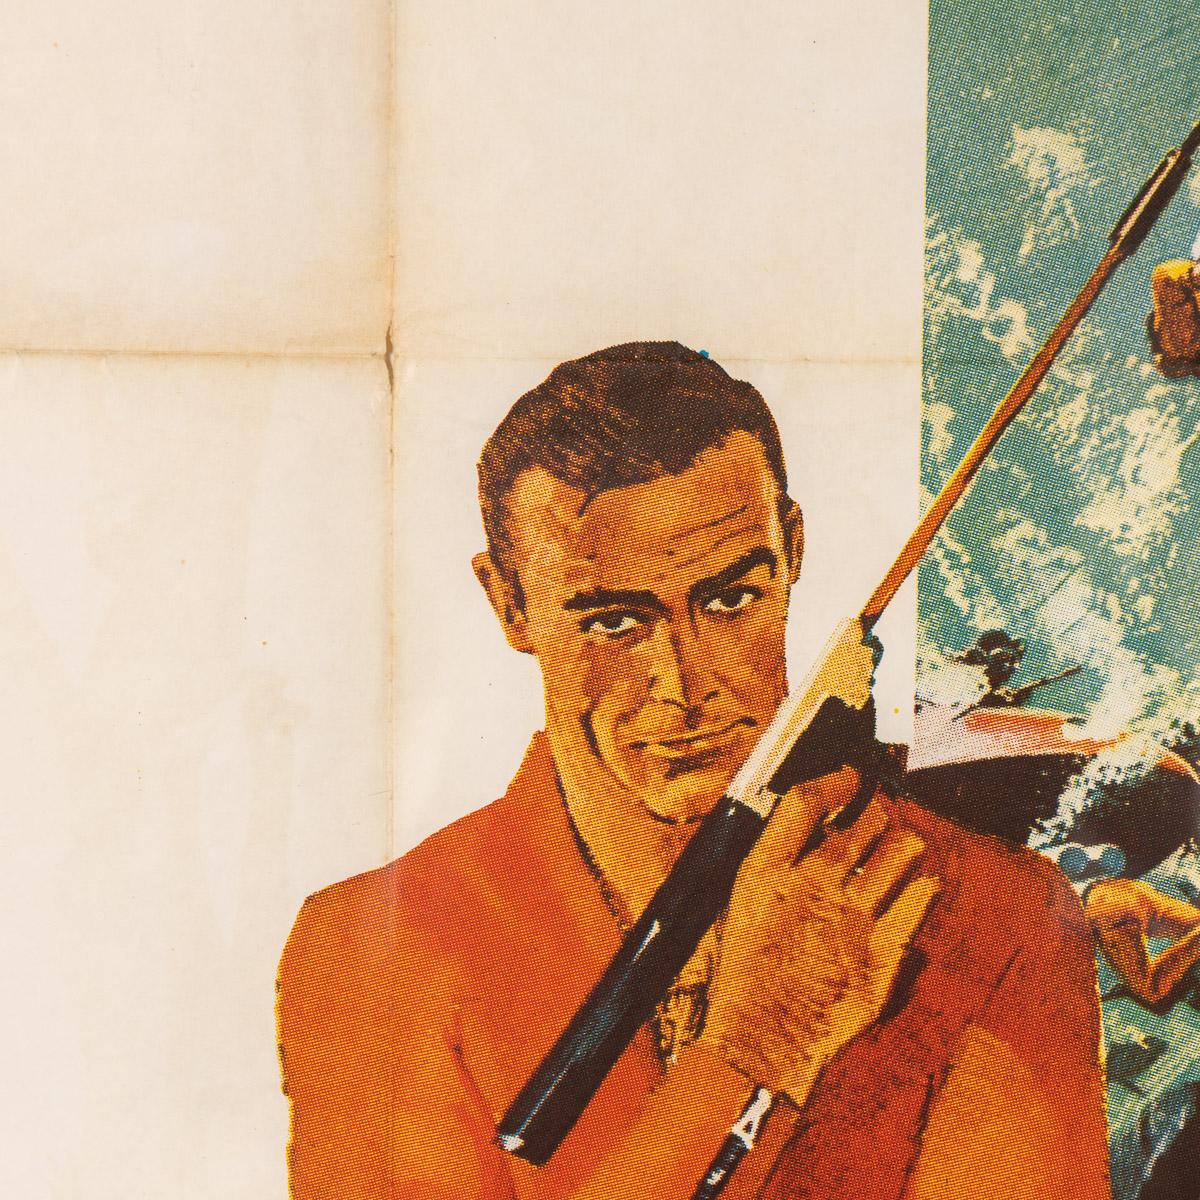 Original French Re-Release James Bond 'Thunderball' Poster 5